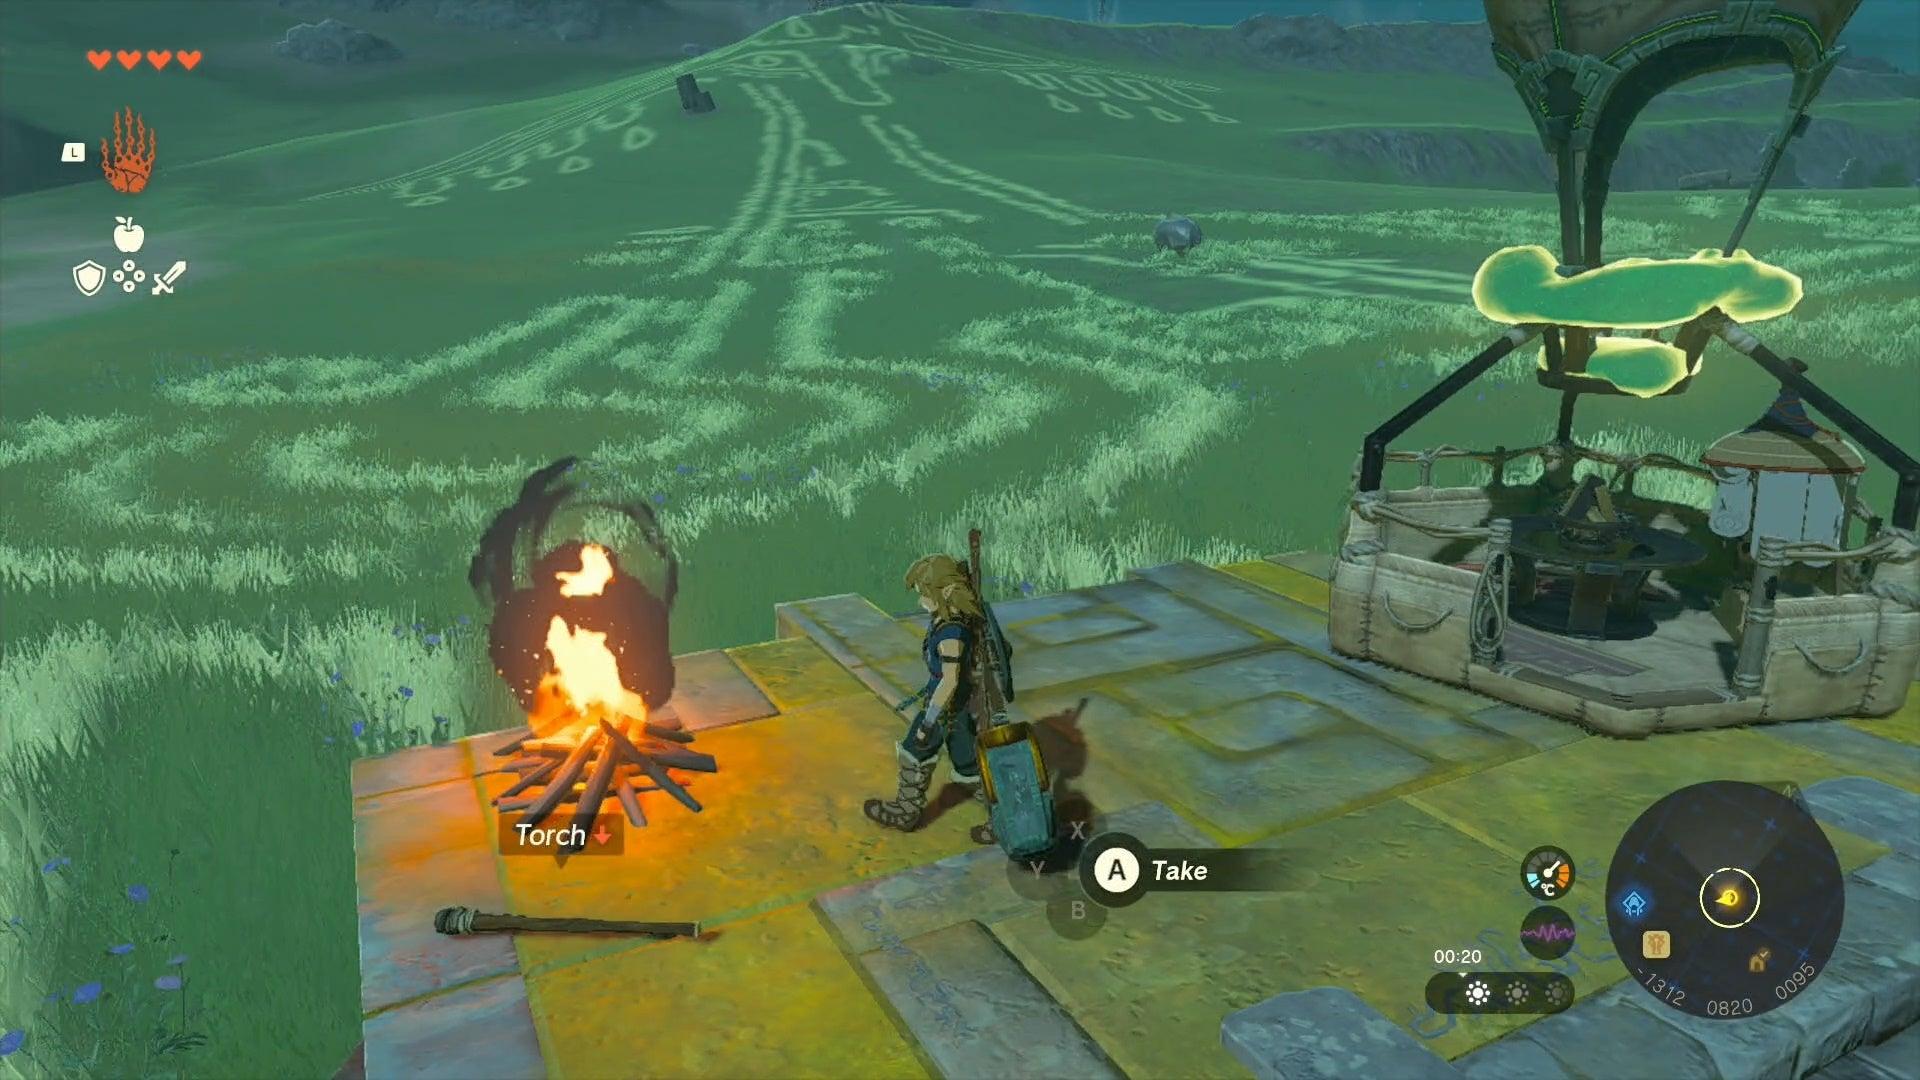 Link walking towards a campfire as he fixes Impa